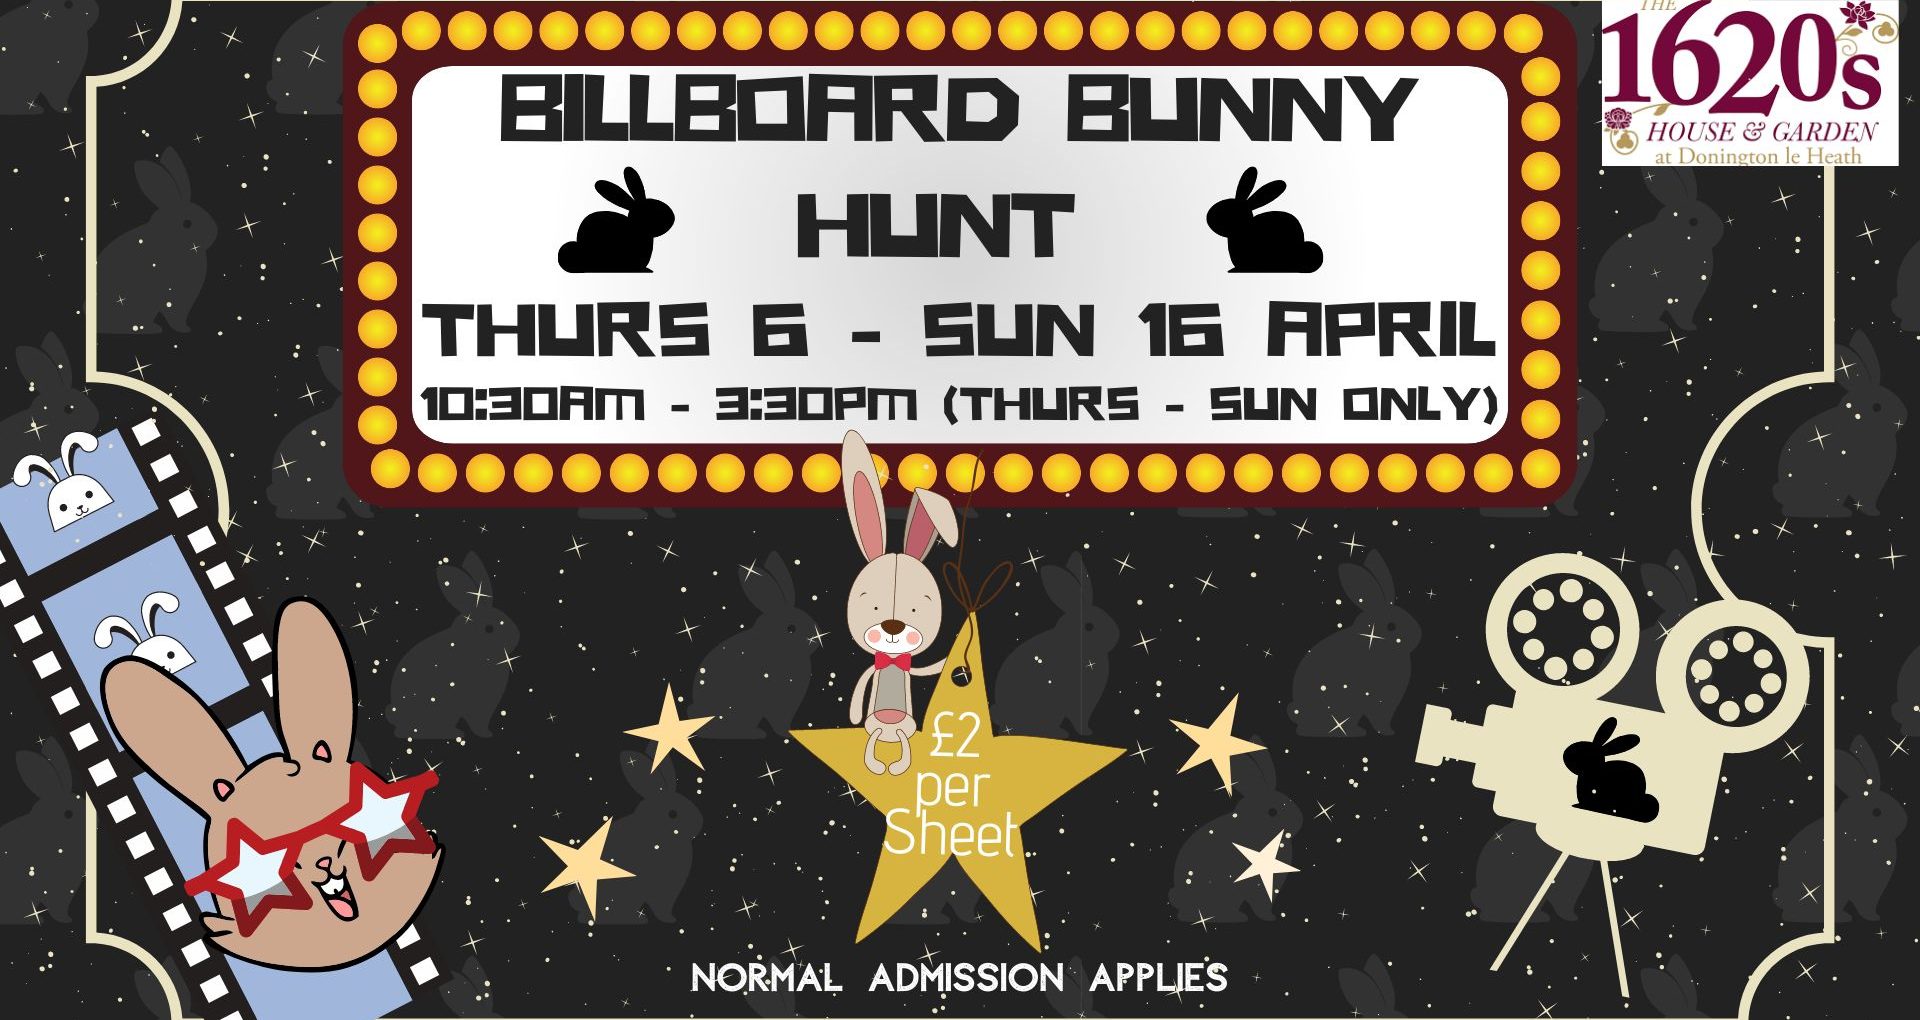 Billboard Bunny Hunt